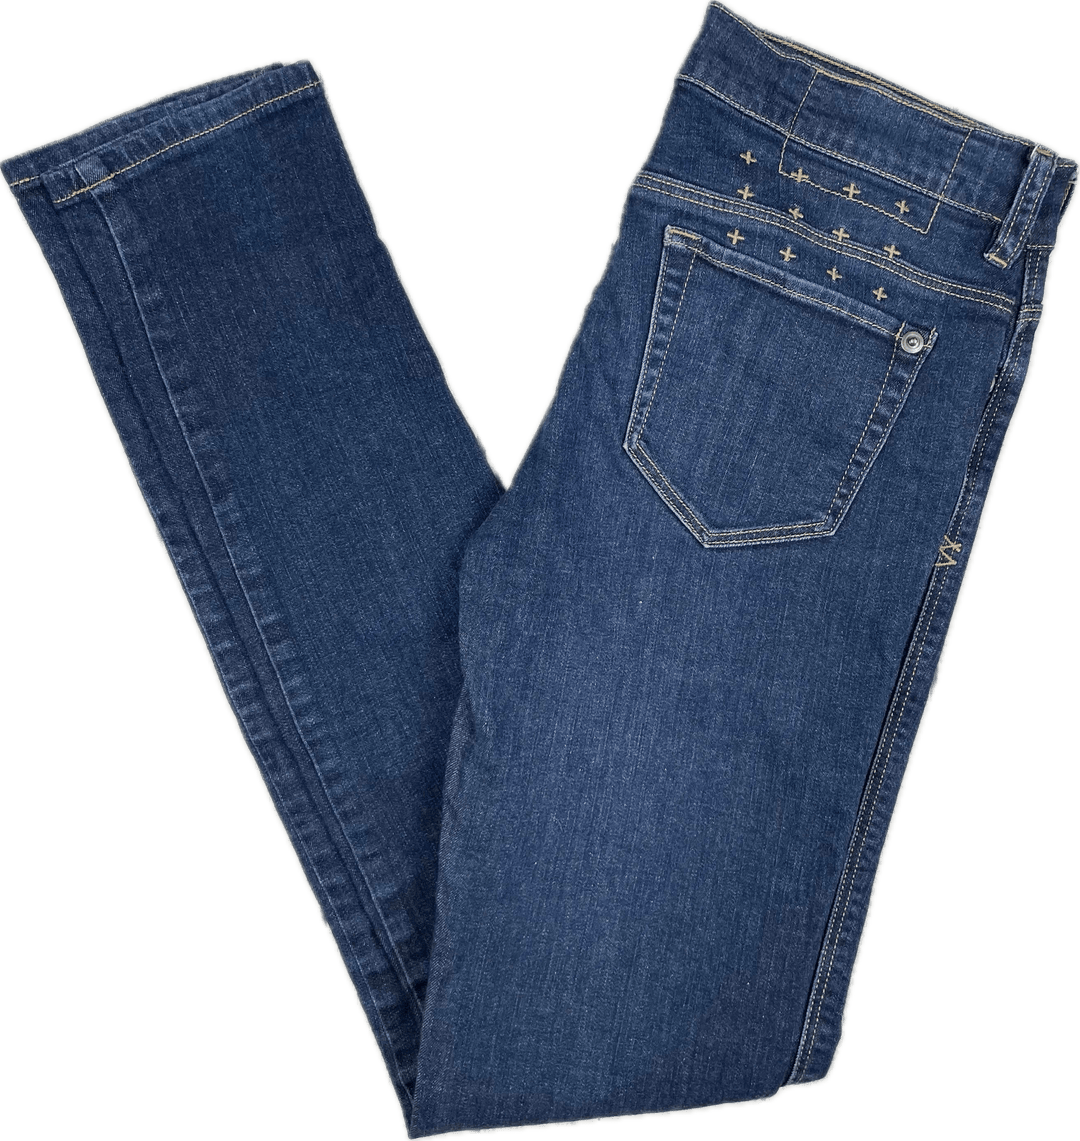 Tsubi 'Super Skinny' Jeans in Tight Arse Indigo Wash - Size 26 - Jean Pool